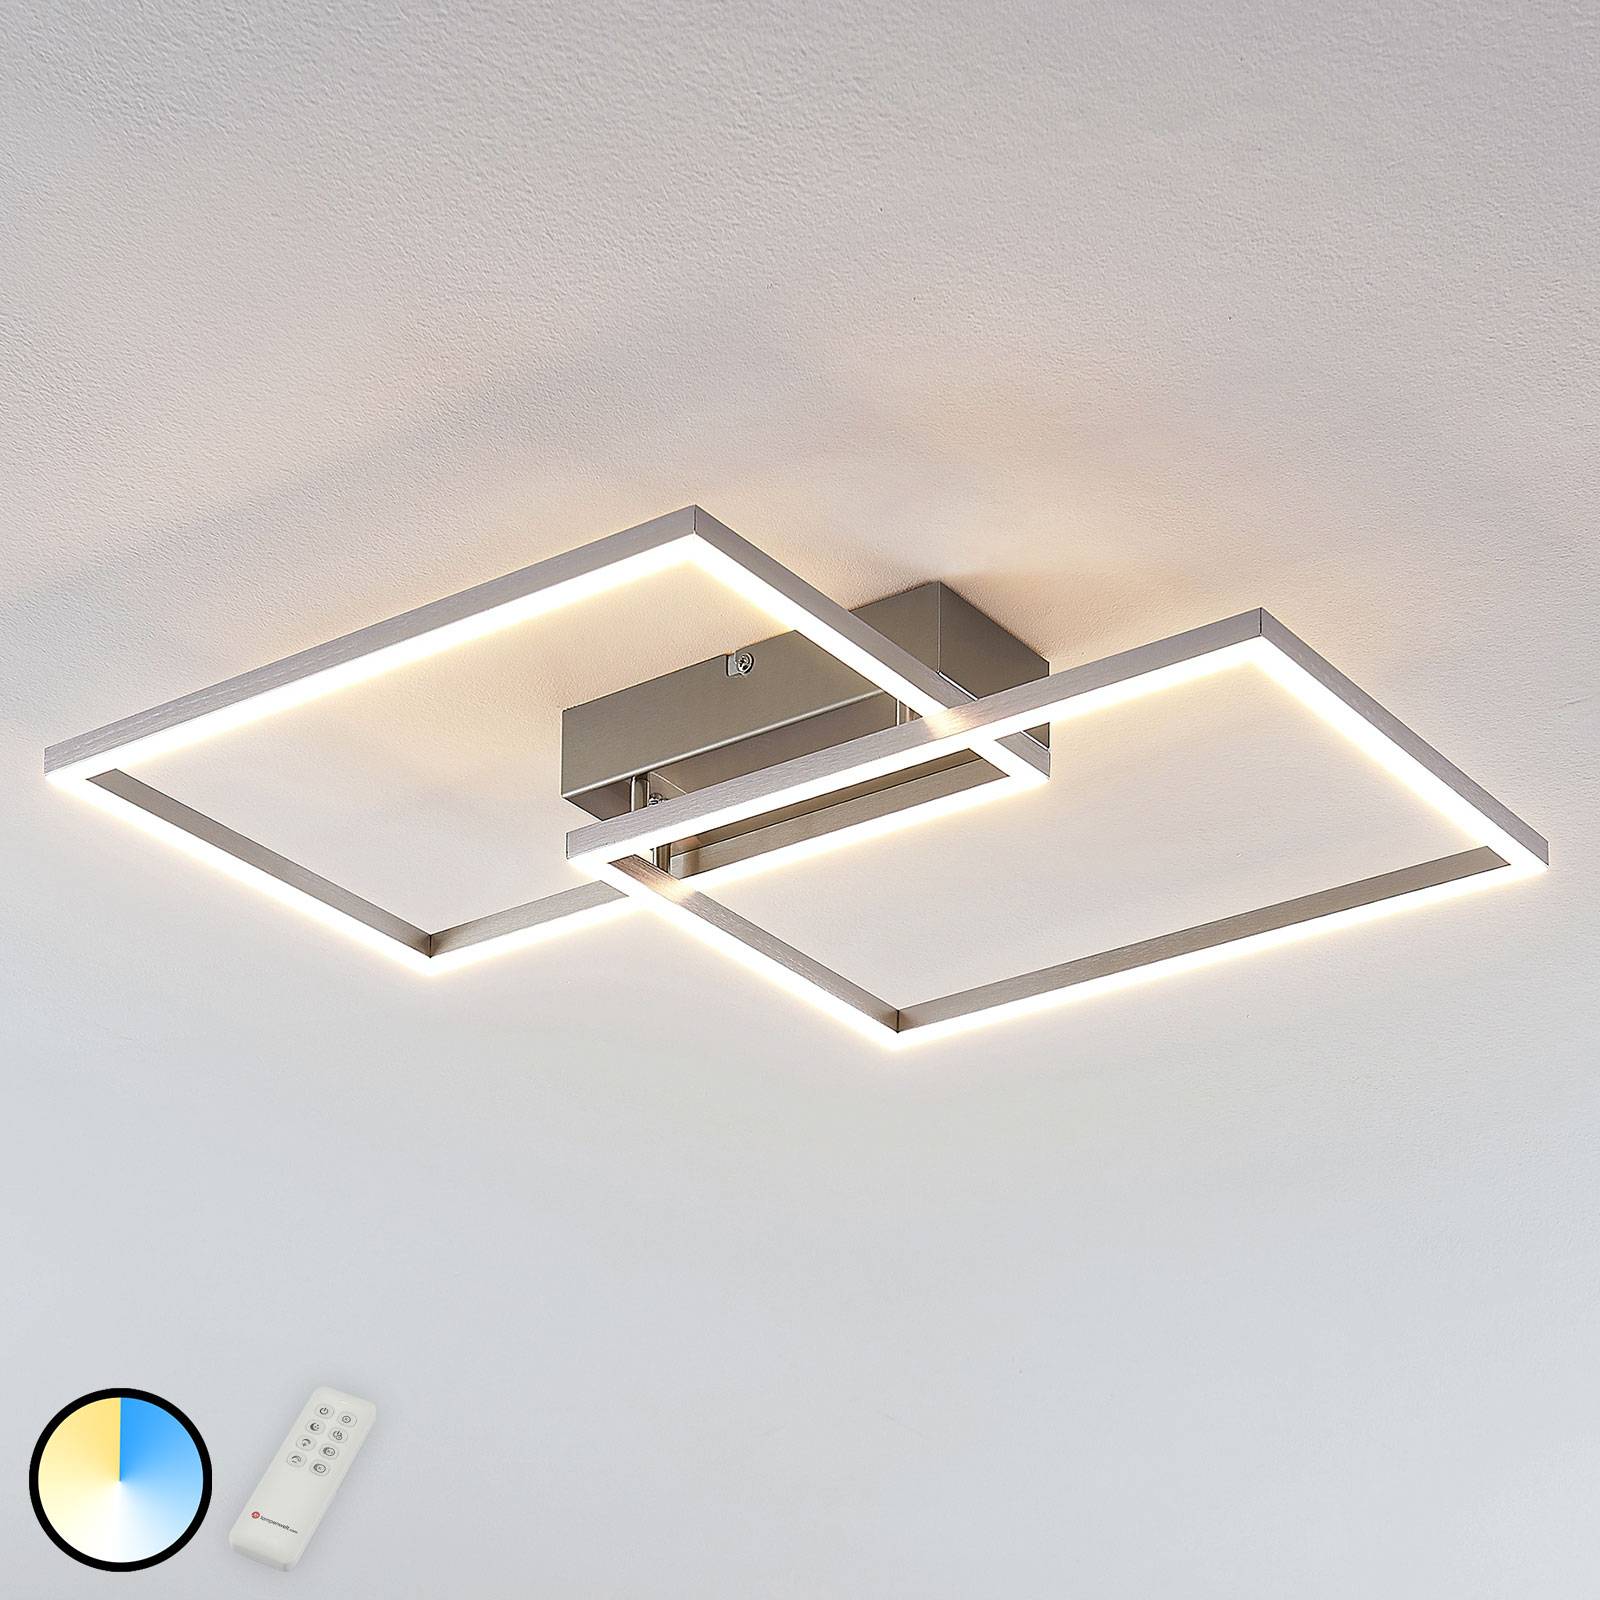 LED plafondlamp Quadra, dimbaar, 2 lampen, 50 cm